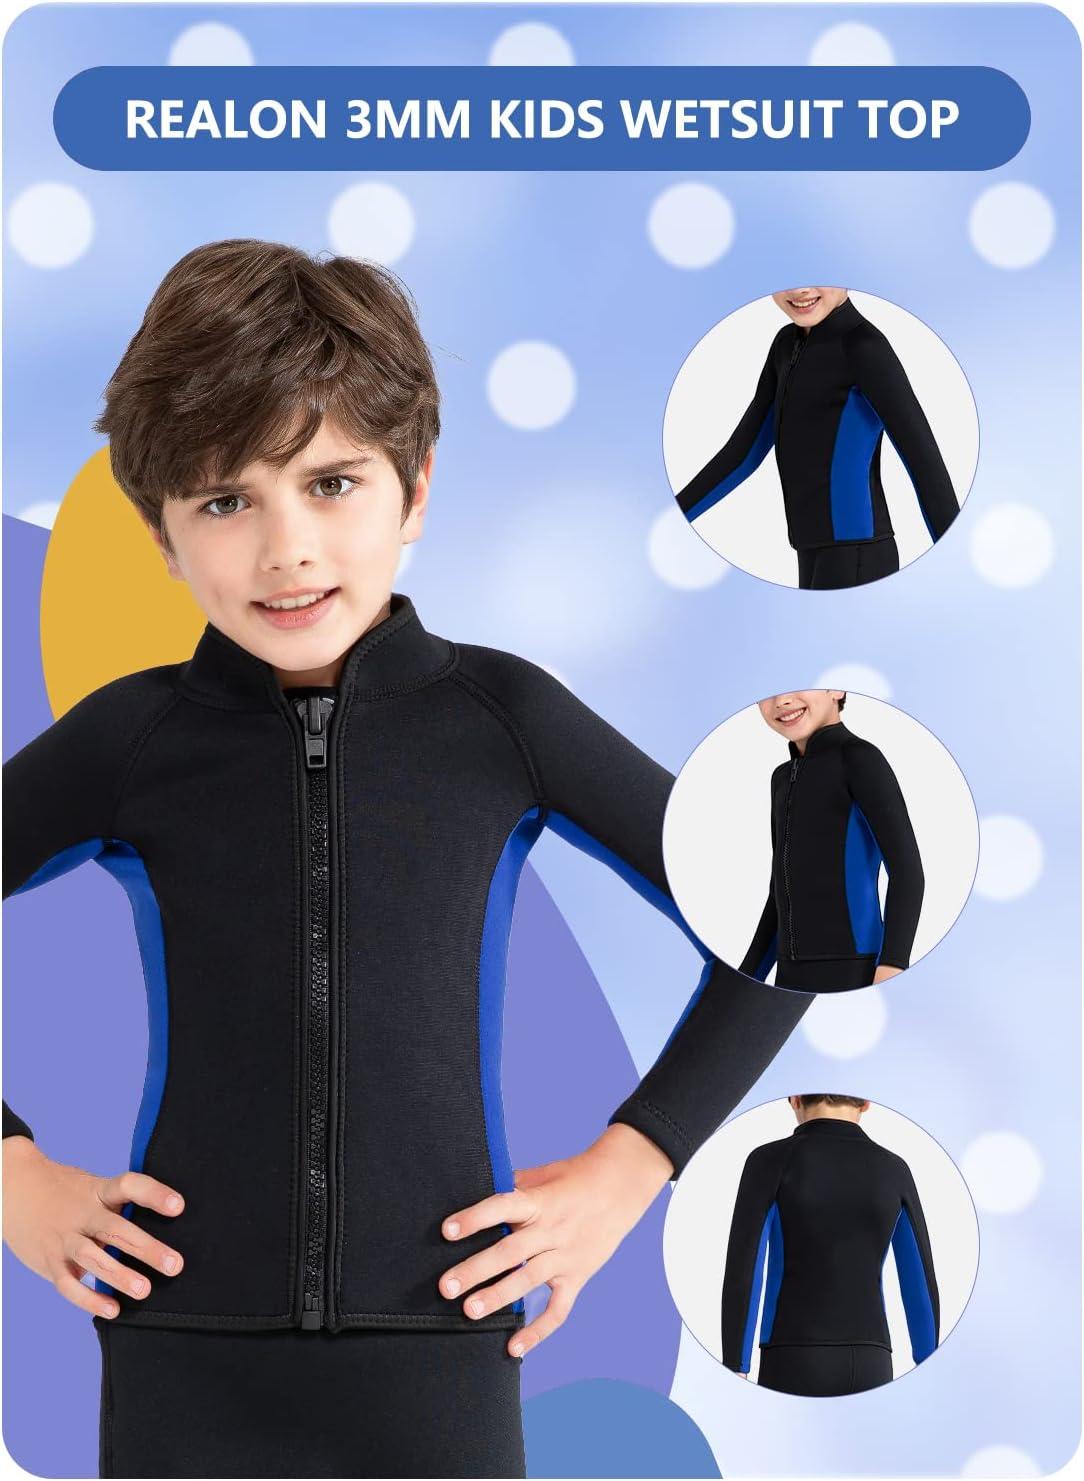 Realon Kids Wetsuit 3mm Premium Neoprene Youth for Girls and Boys